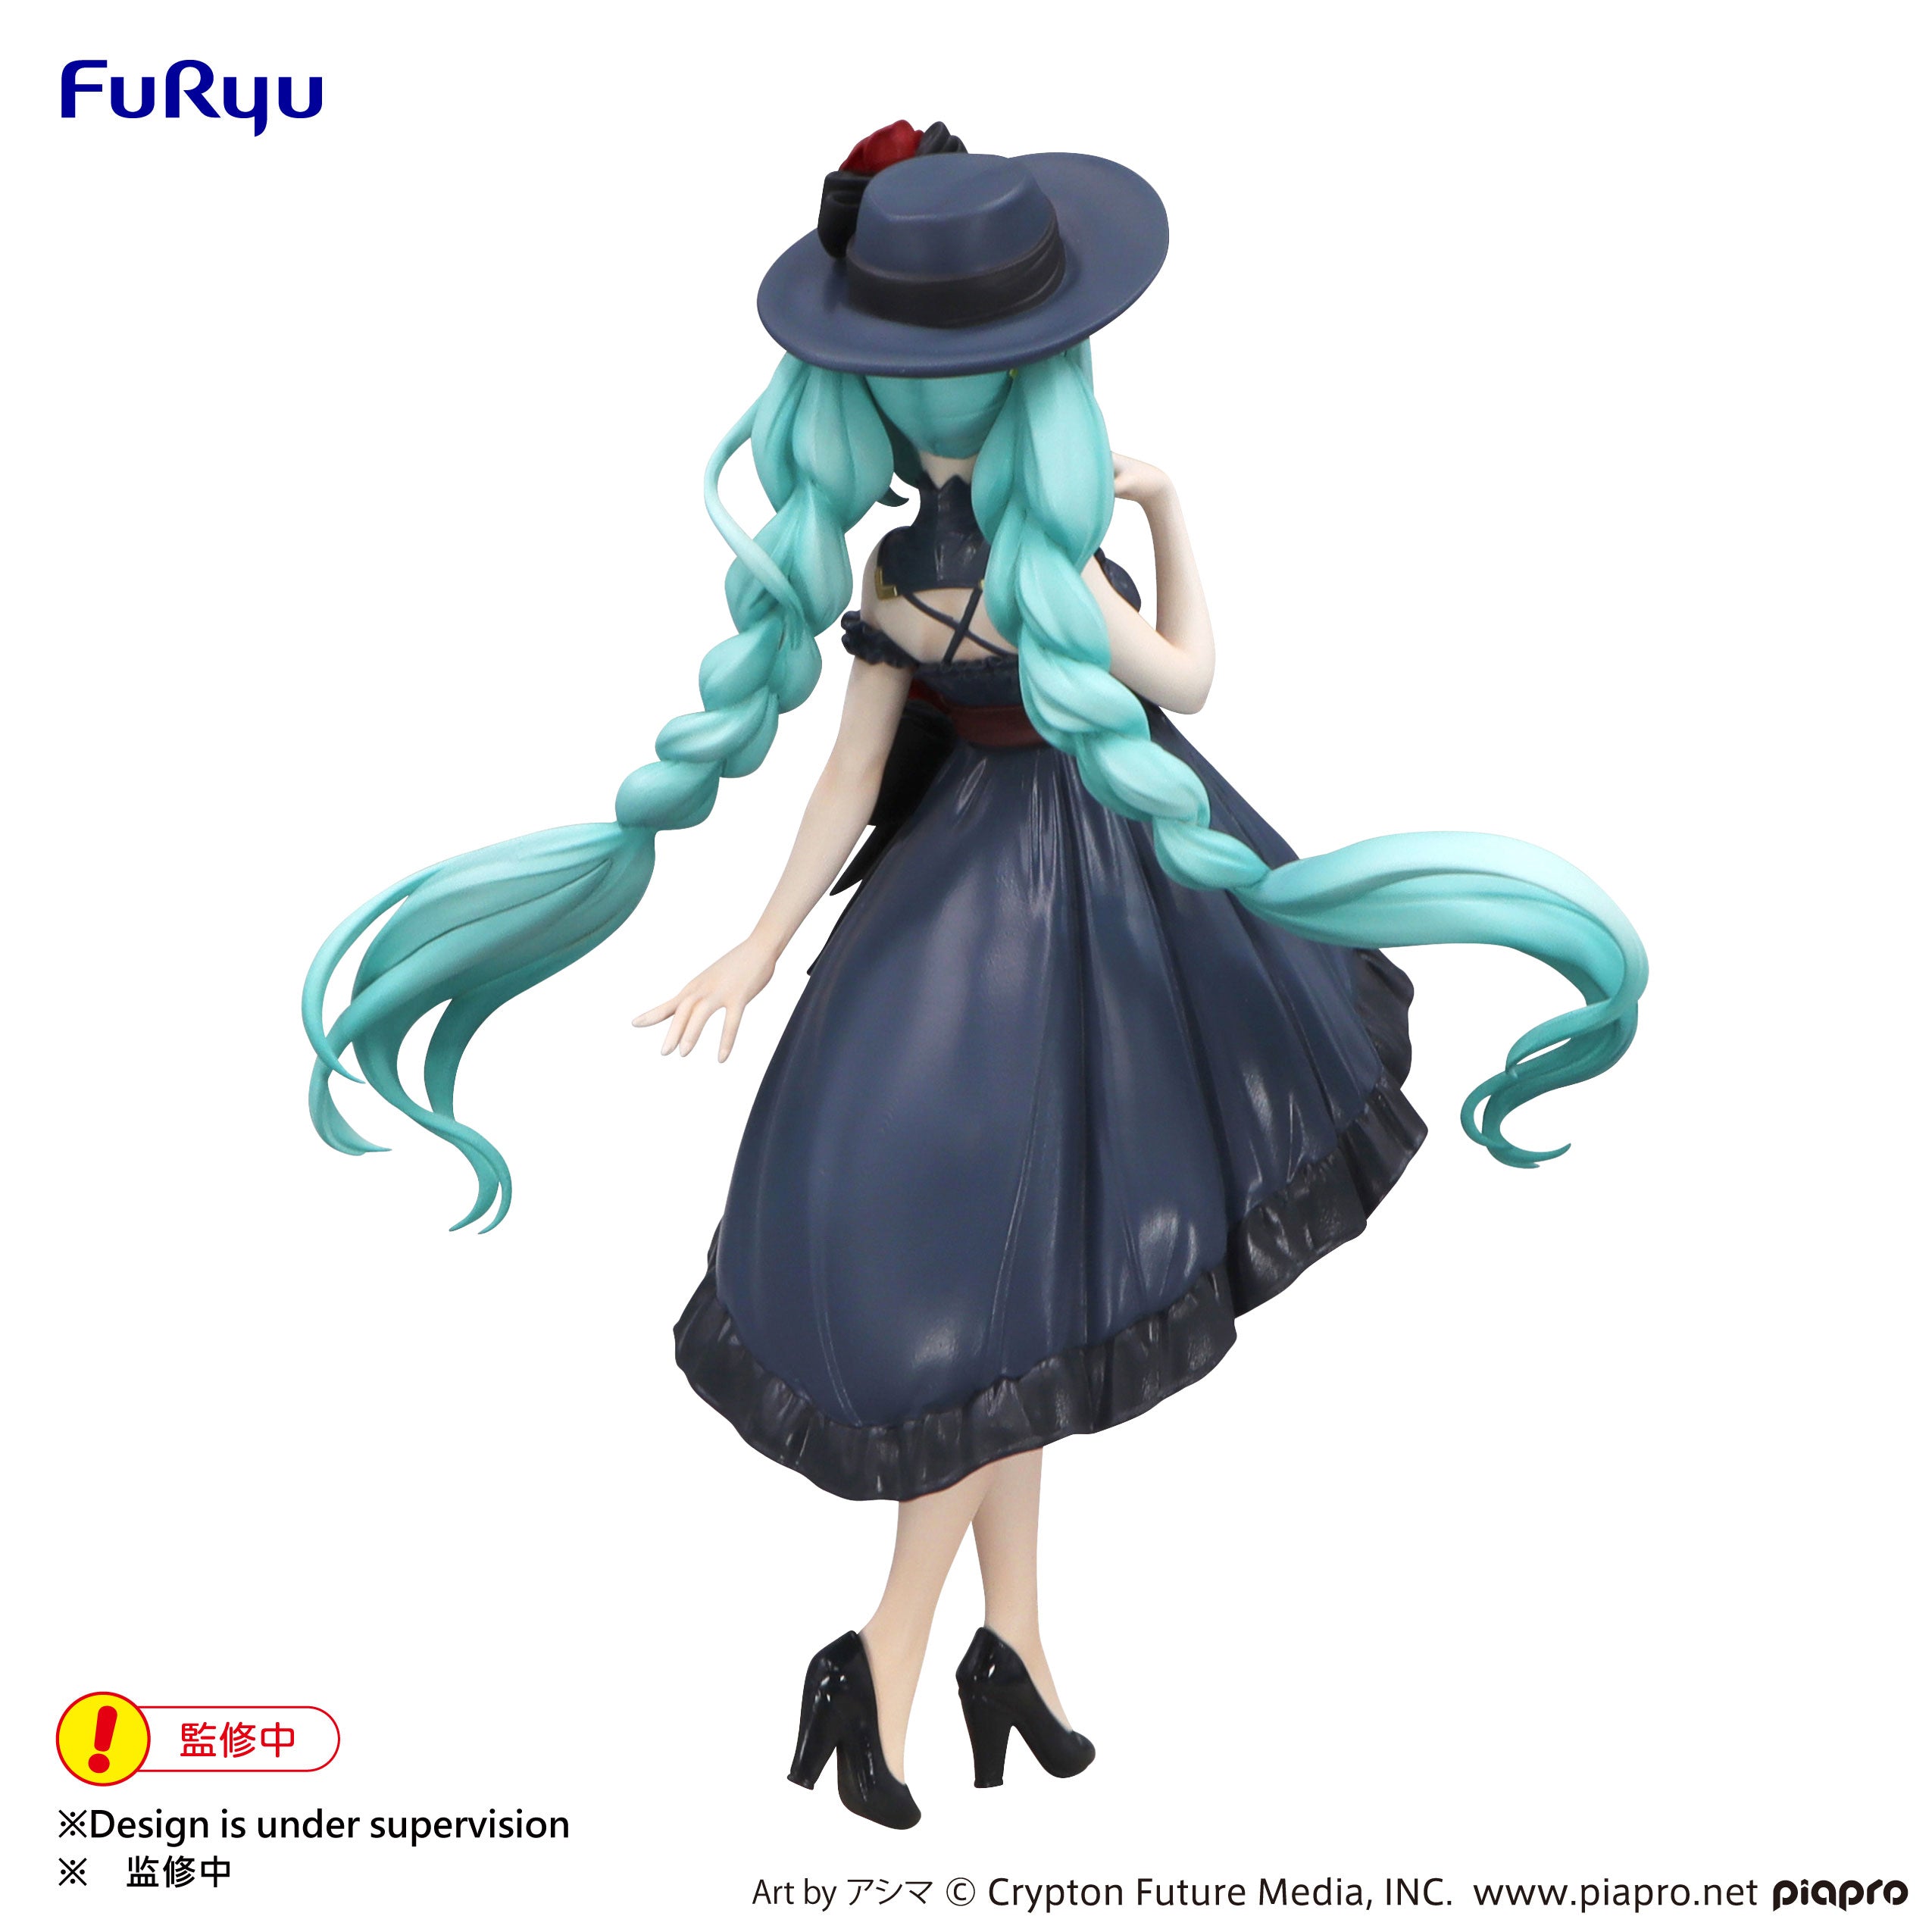 Furyu Figures Trio Try It: Hatsune Miku - Miku Con Vestido De Cita